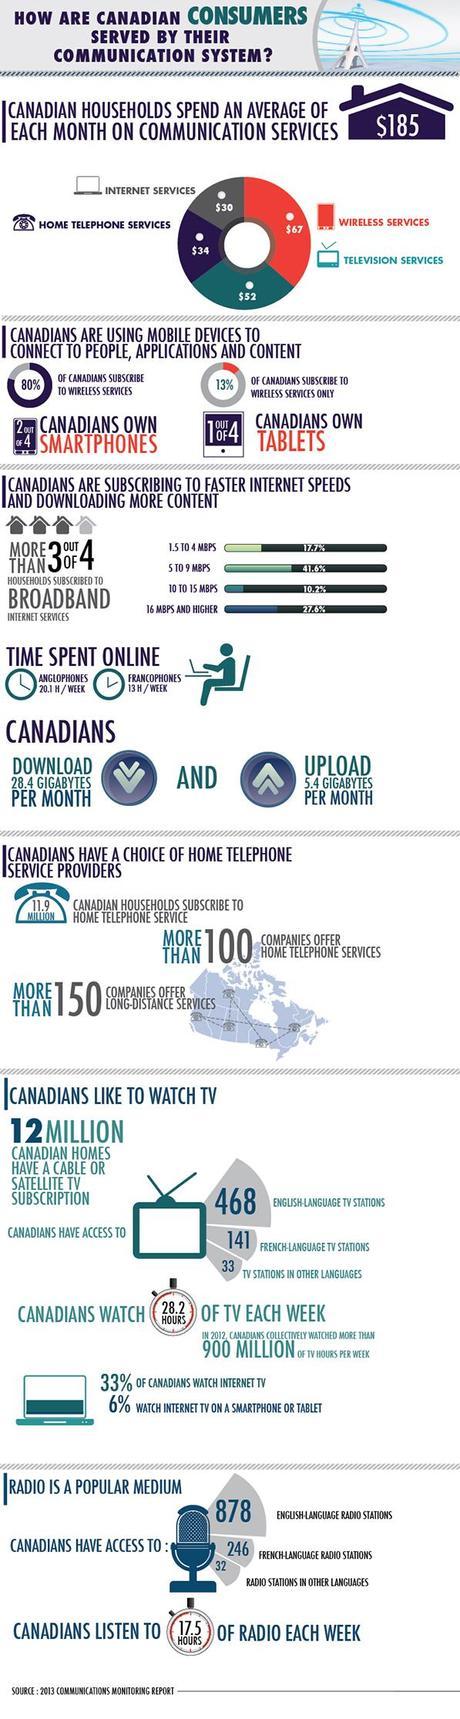 CRTC services communication Canada 2013